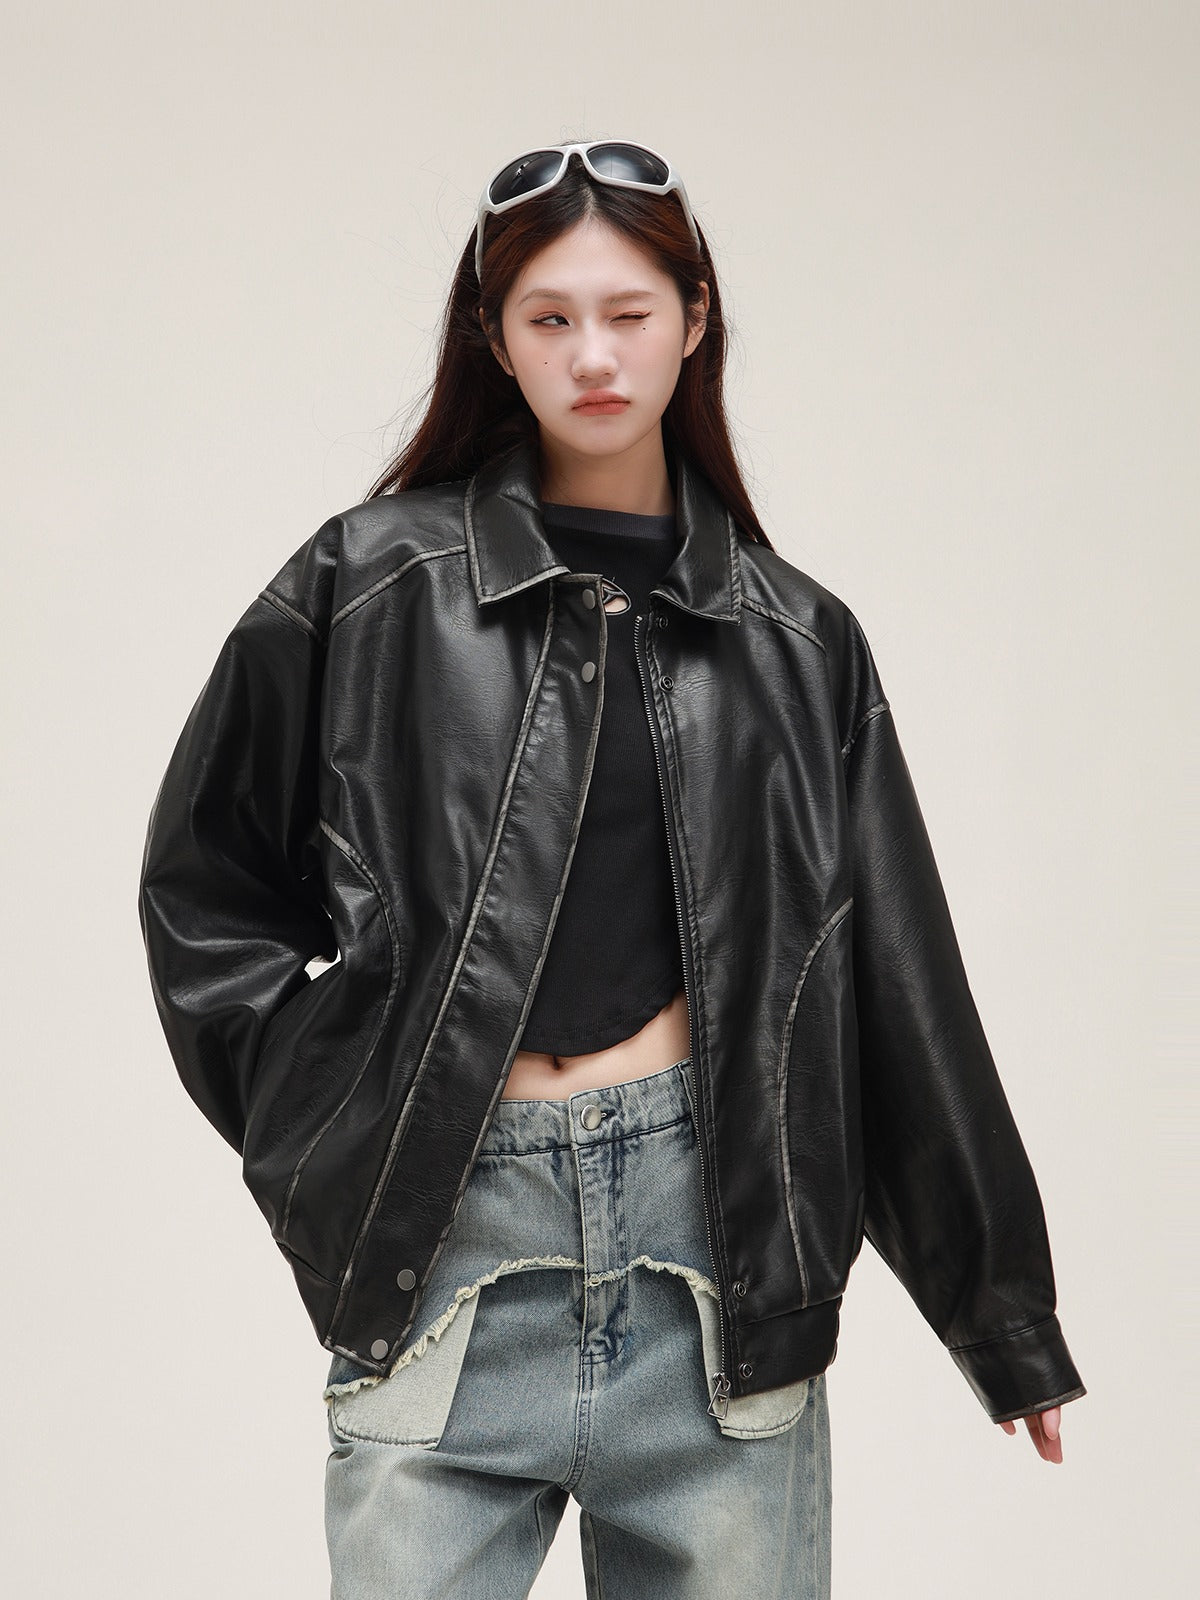 American Leather Jacket